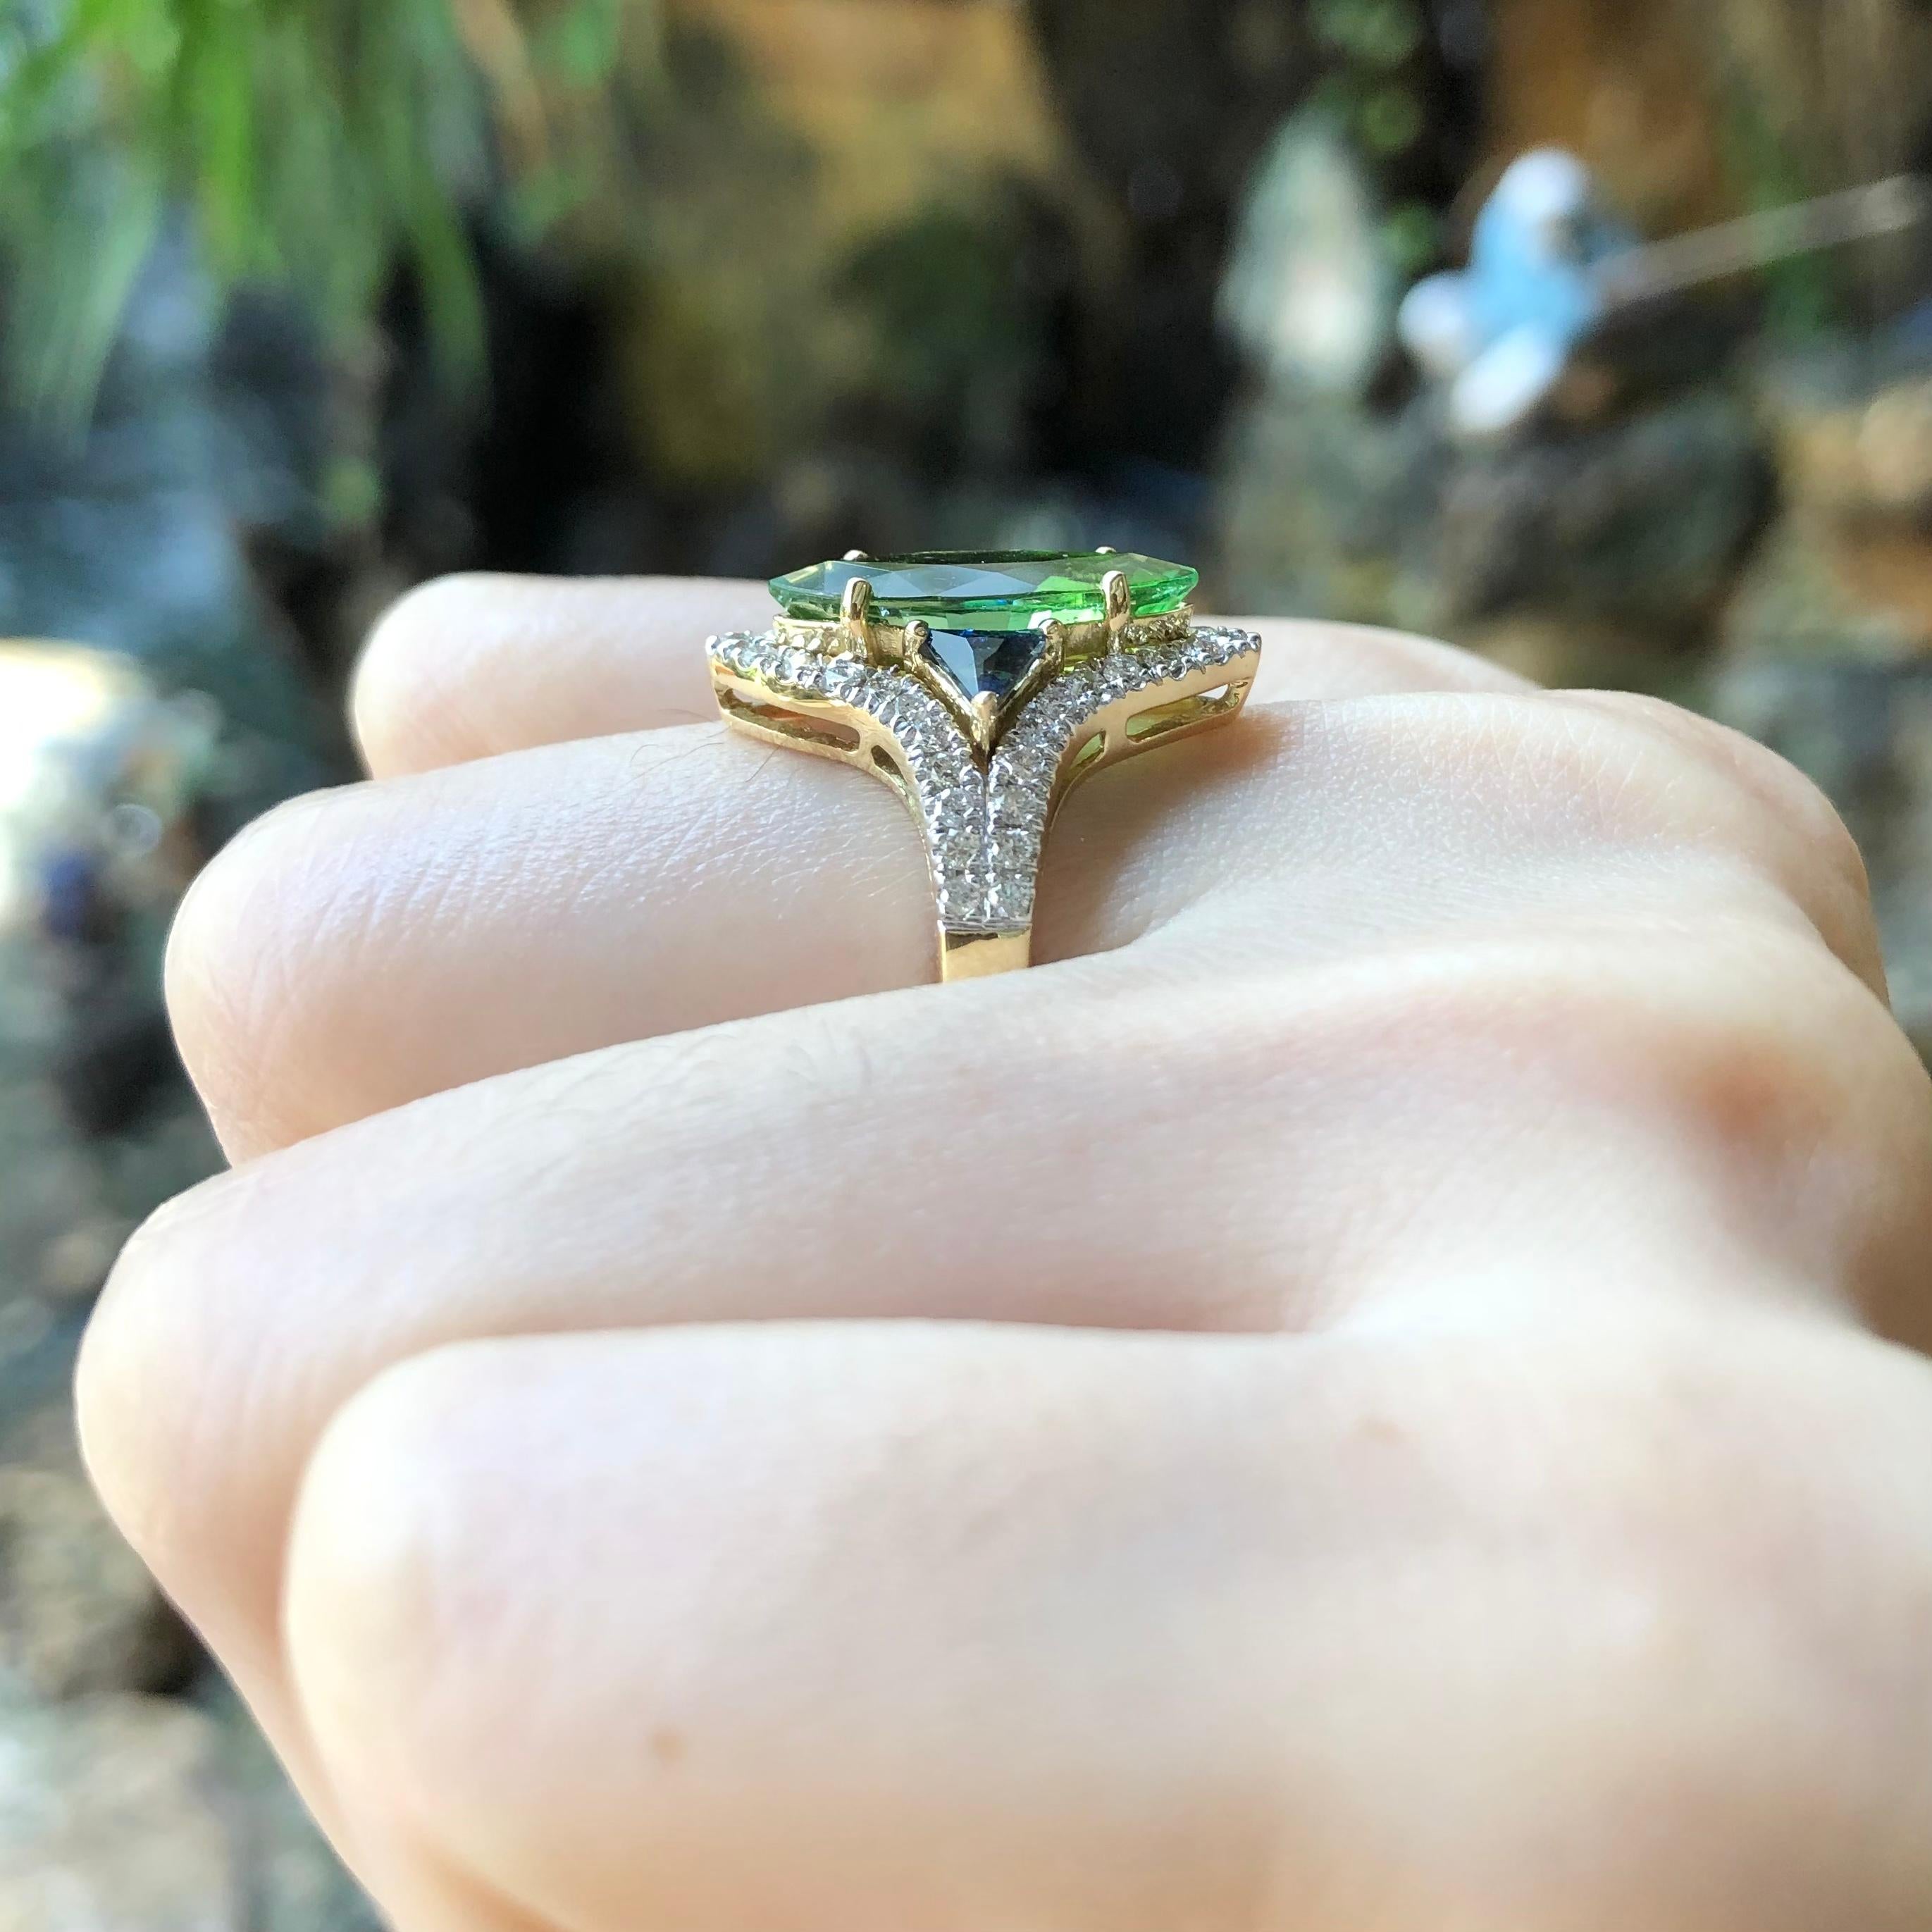 Green Tourmaline 2.84 carats, Blue Sapphire 0.53 carat and Brown Diamond 0.55 carat Ring set in 18 Karat Gold Settings

Width:  1.8 cm 
Length: 2.1 cm
Ring Size: 54
Total Weight: 6.29 grams



